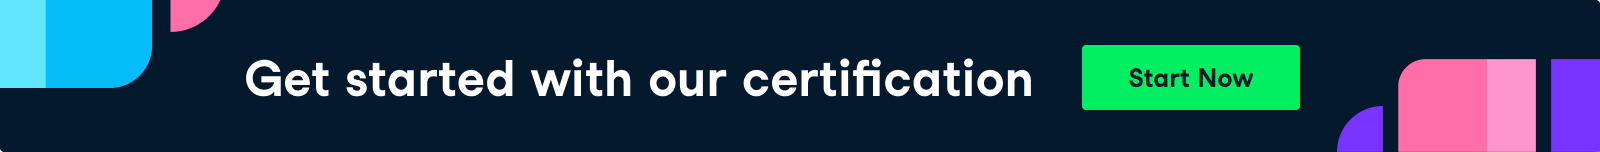 Certification banner